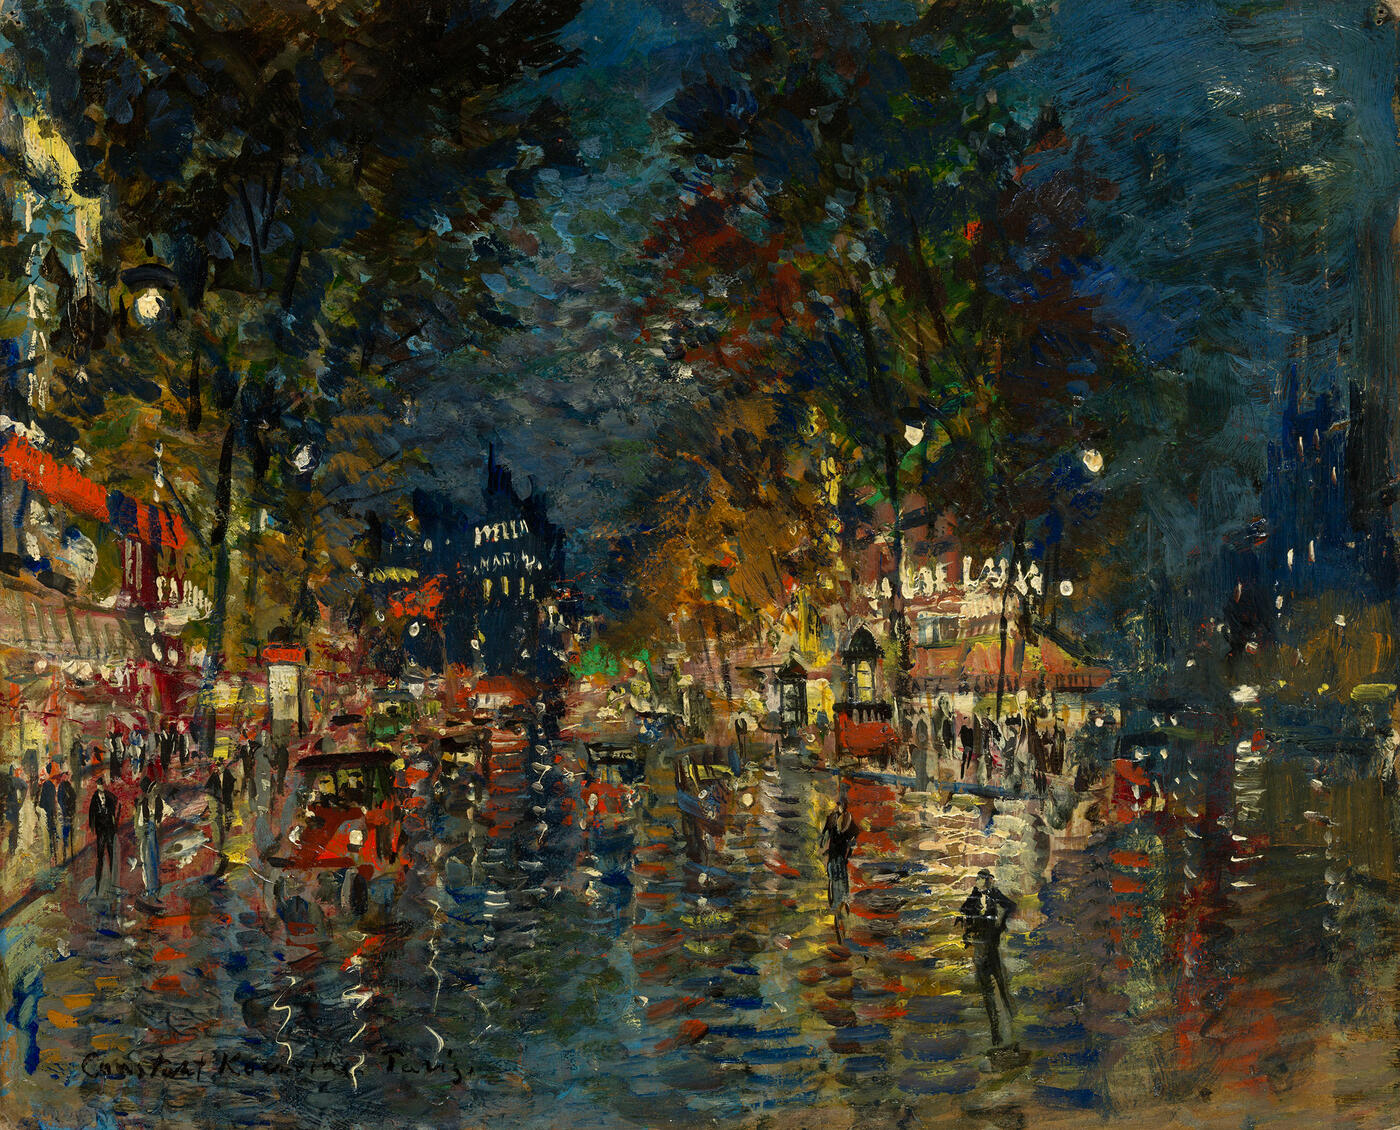 Parisian Boulevard by Night